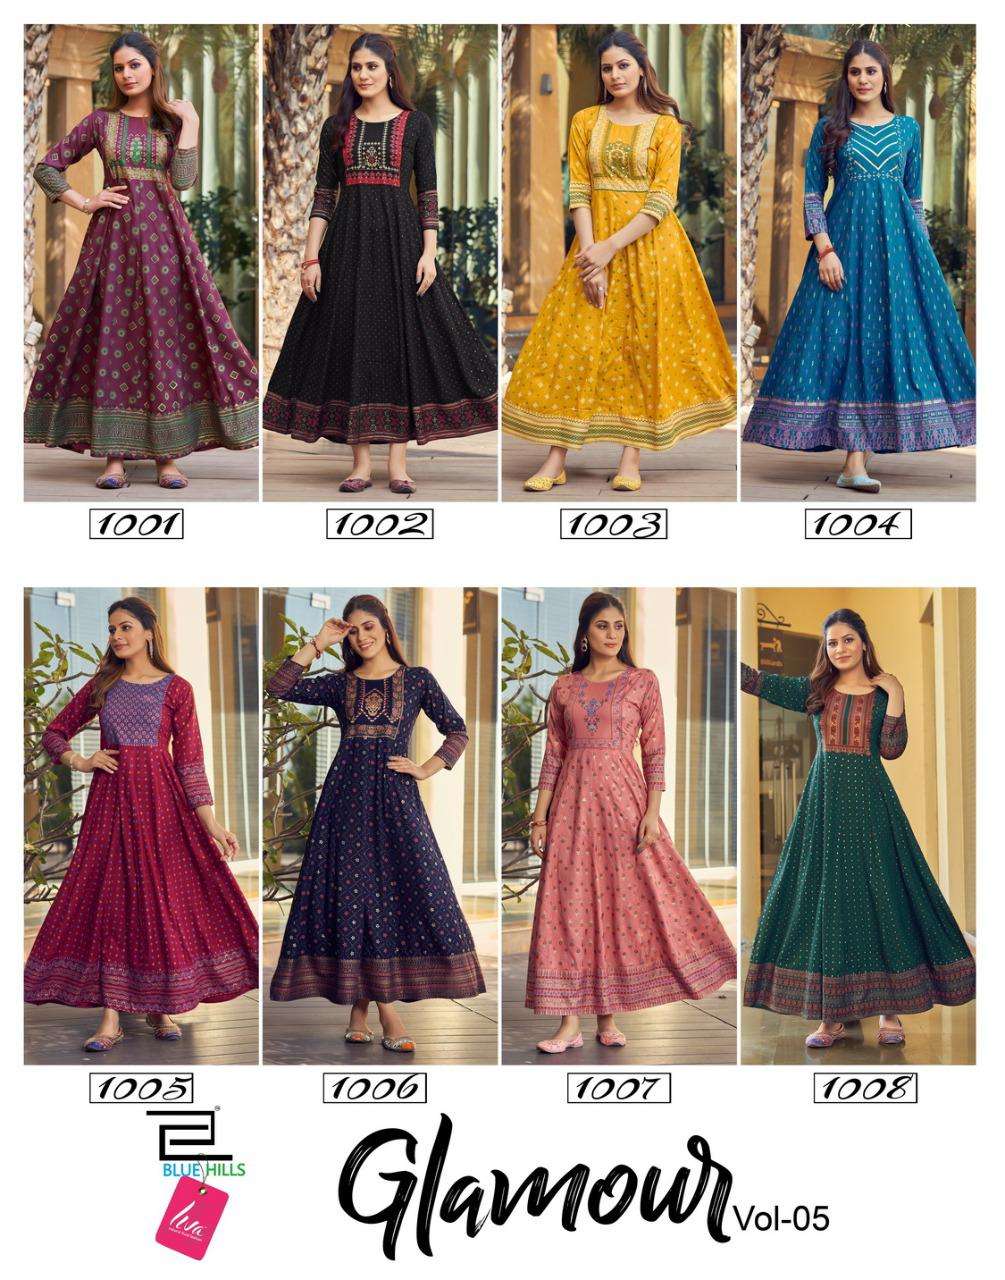 bluehills glamour vol 5 1001-1008 series famcy designer long kurti catalogue collection 2022